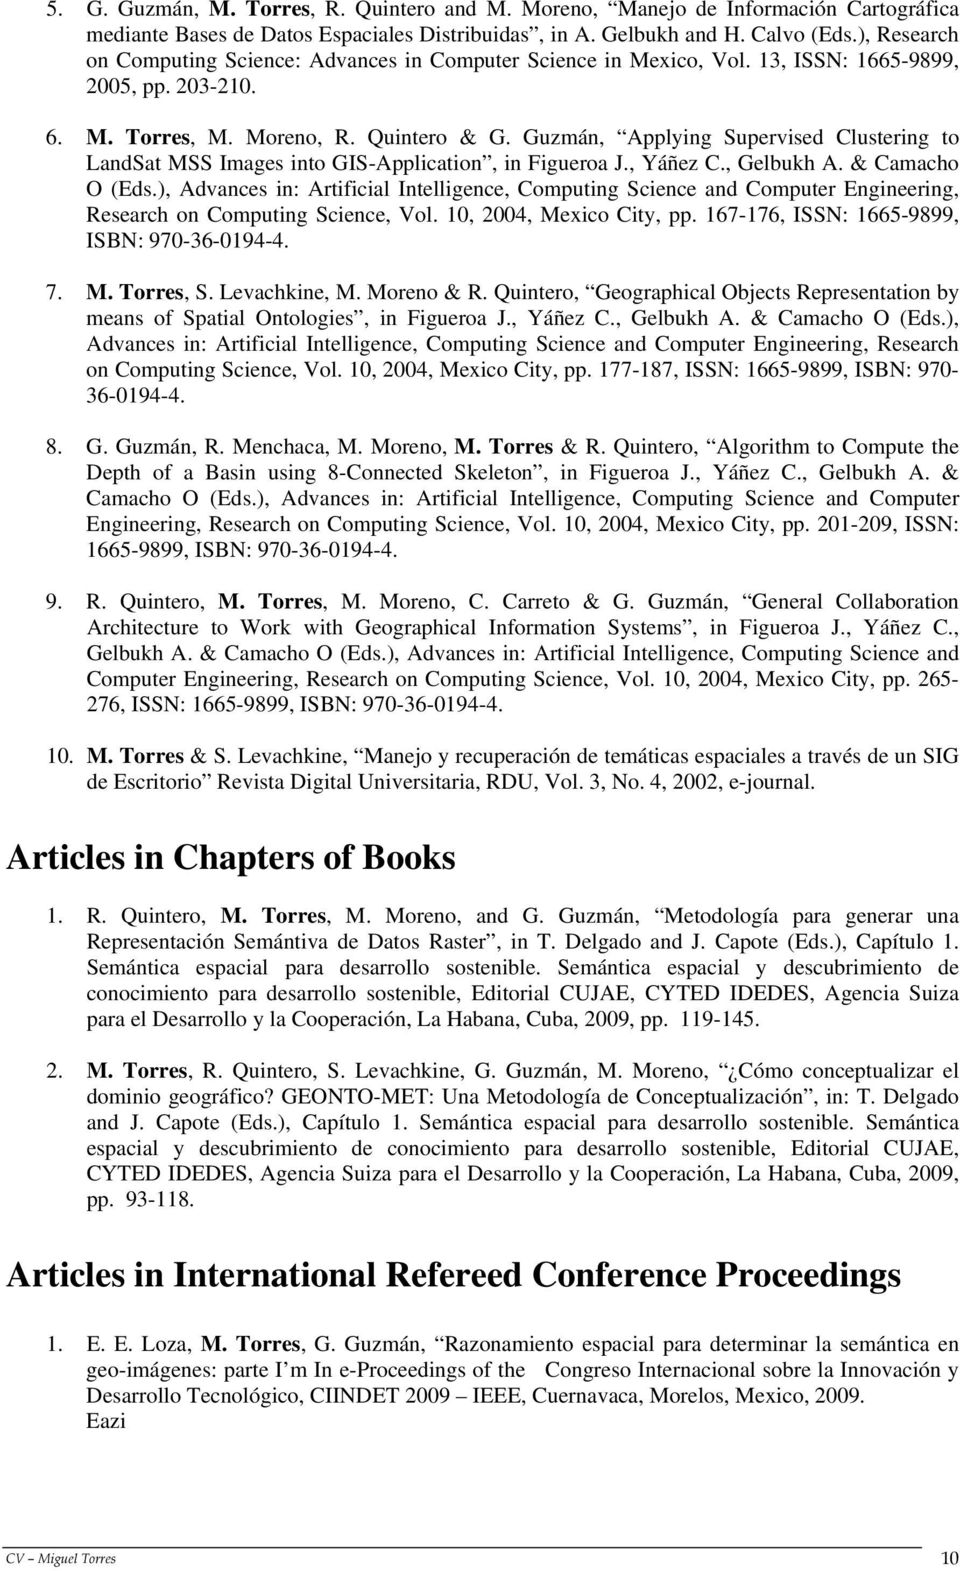 Guzmán, Applying Supervised Clustering to LandSat MSS Images into GIS-Application, in Figueroa J., Yáñez C., Gelbukh A. & Camacho O (Eds.